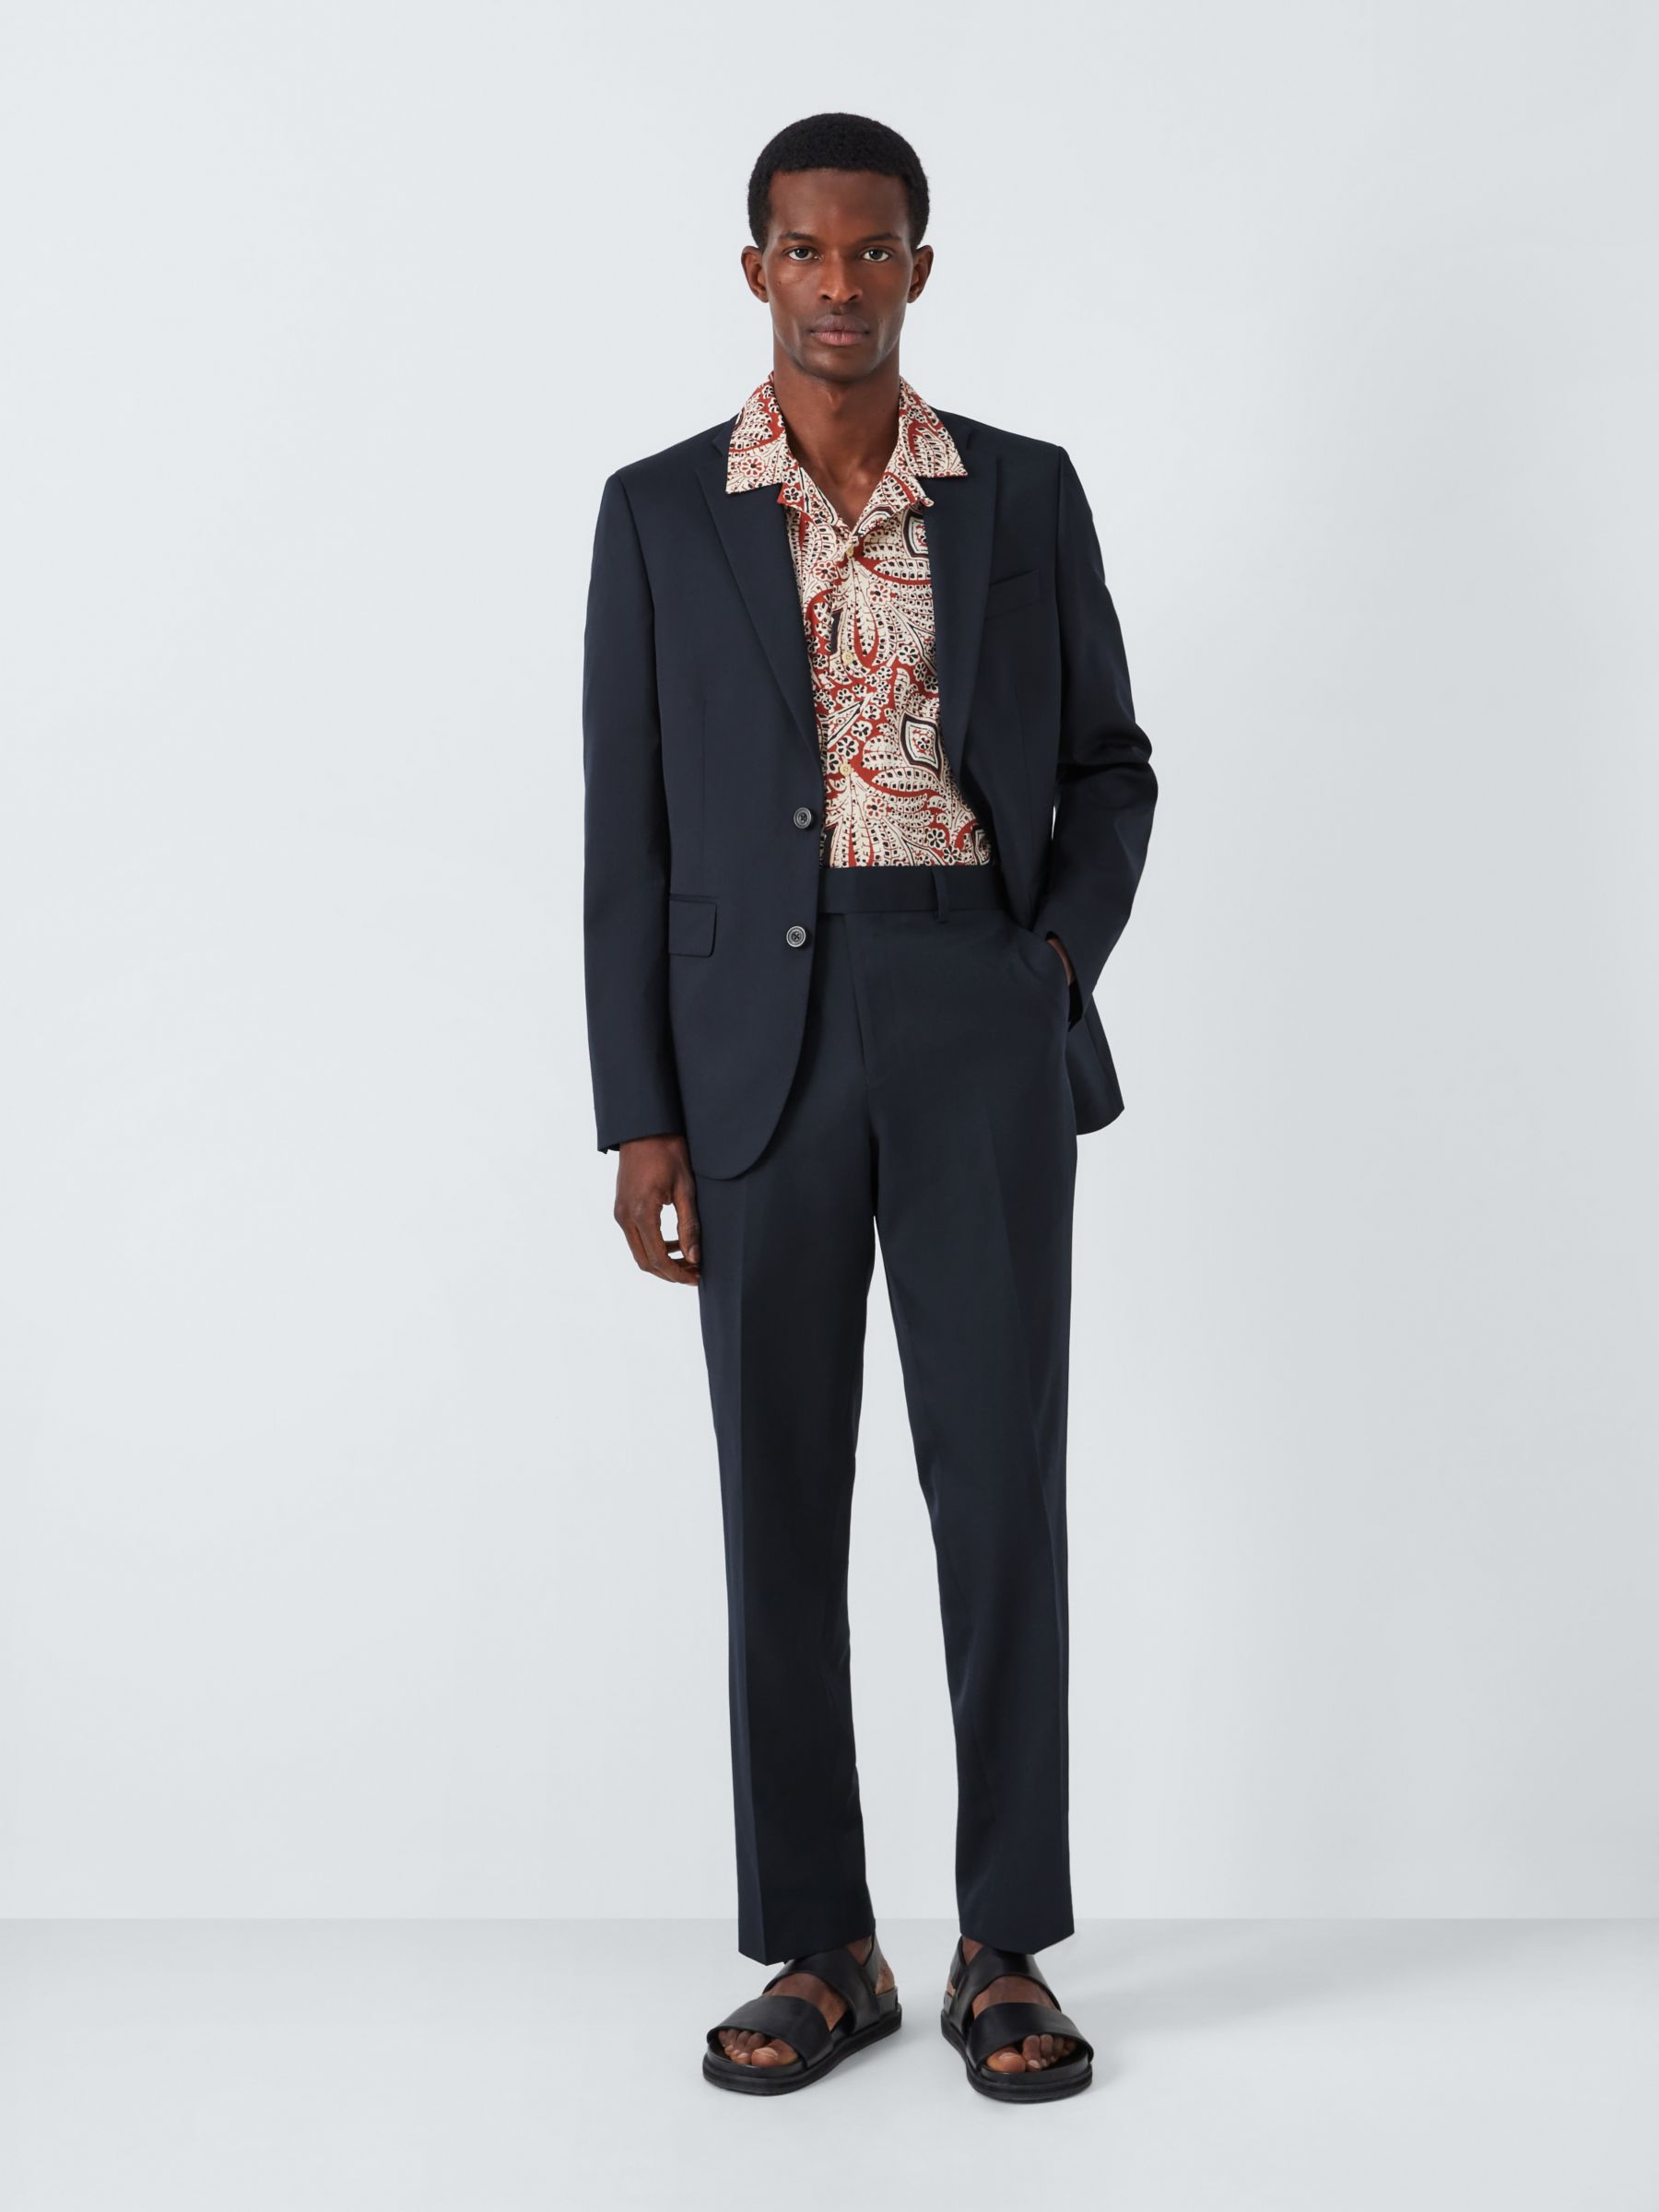 John Lewis Washable Wool Blend Regular Fit Suit Trousers, Navy, 30R